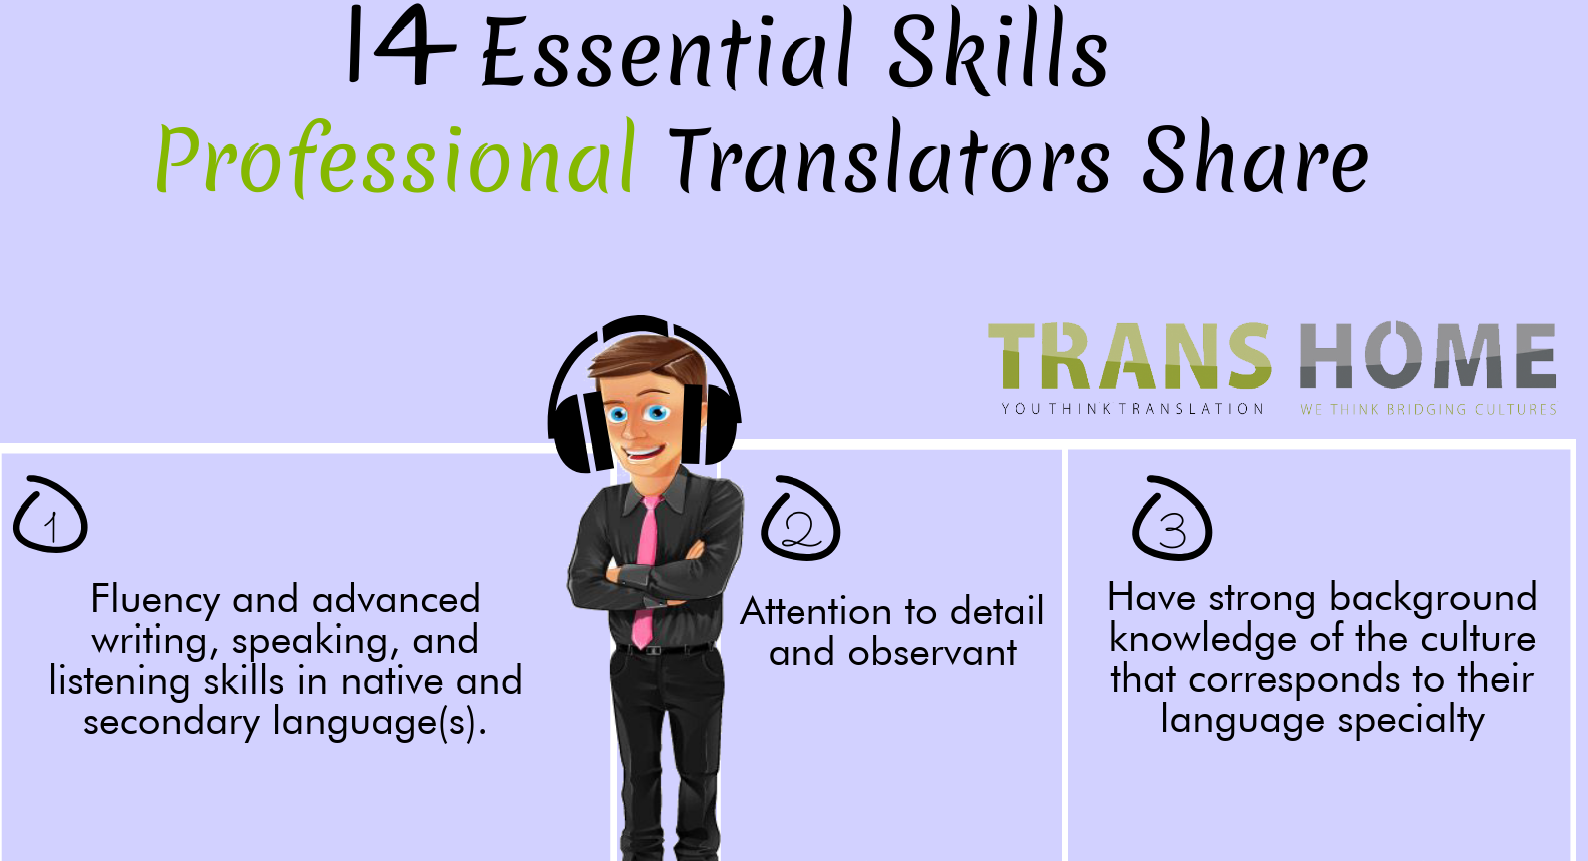 14 Essential Skills Professional Translators Share